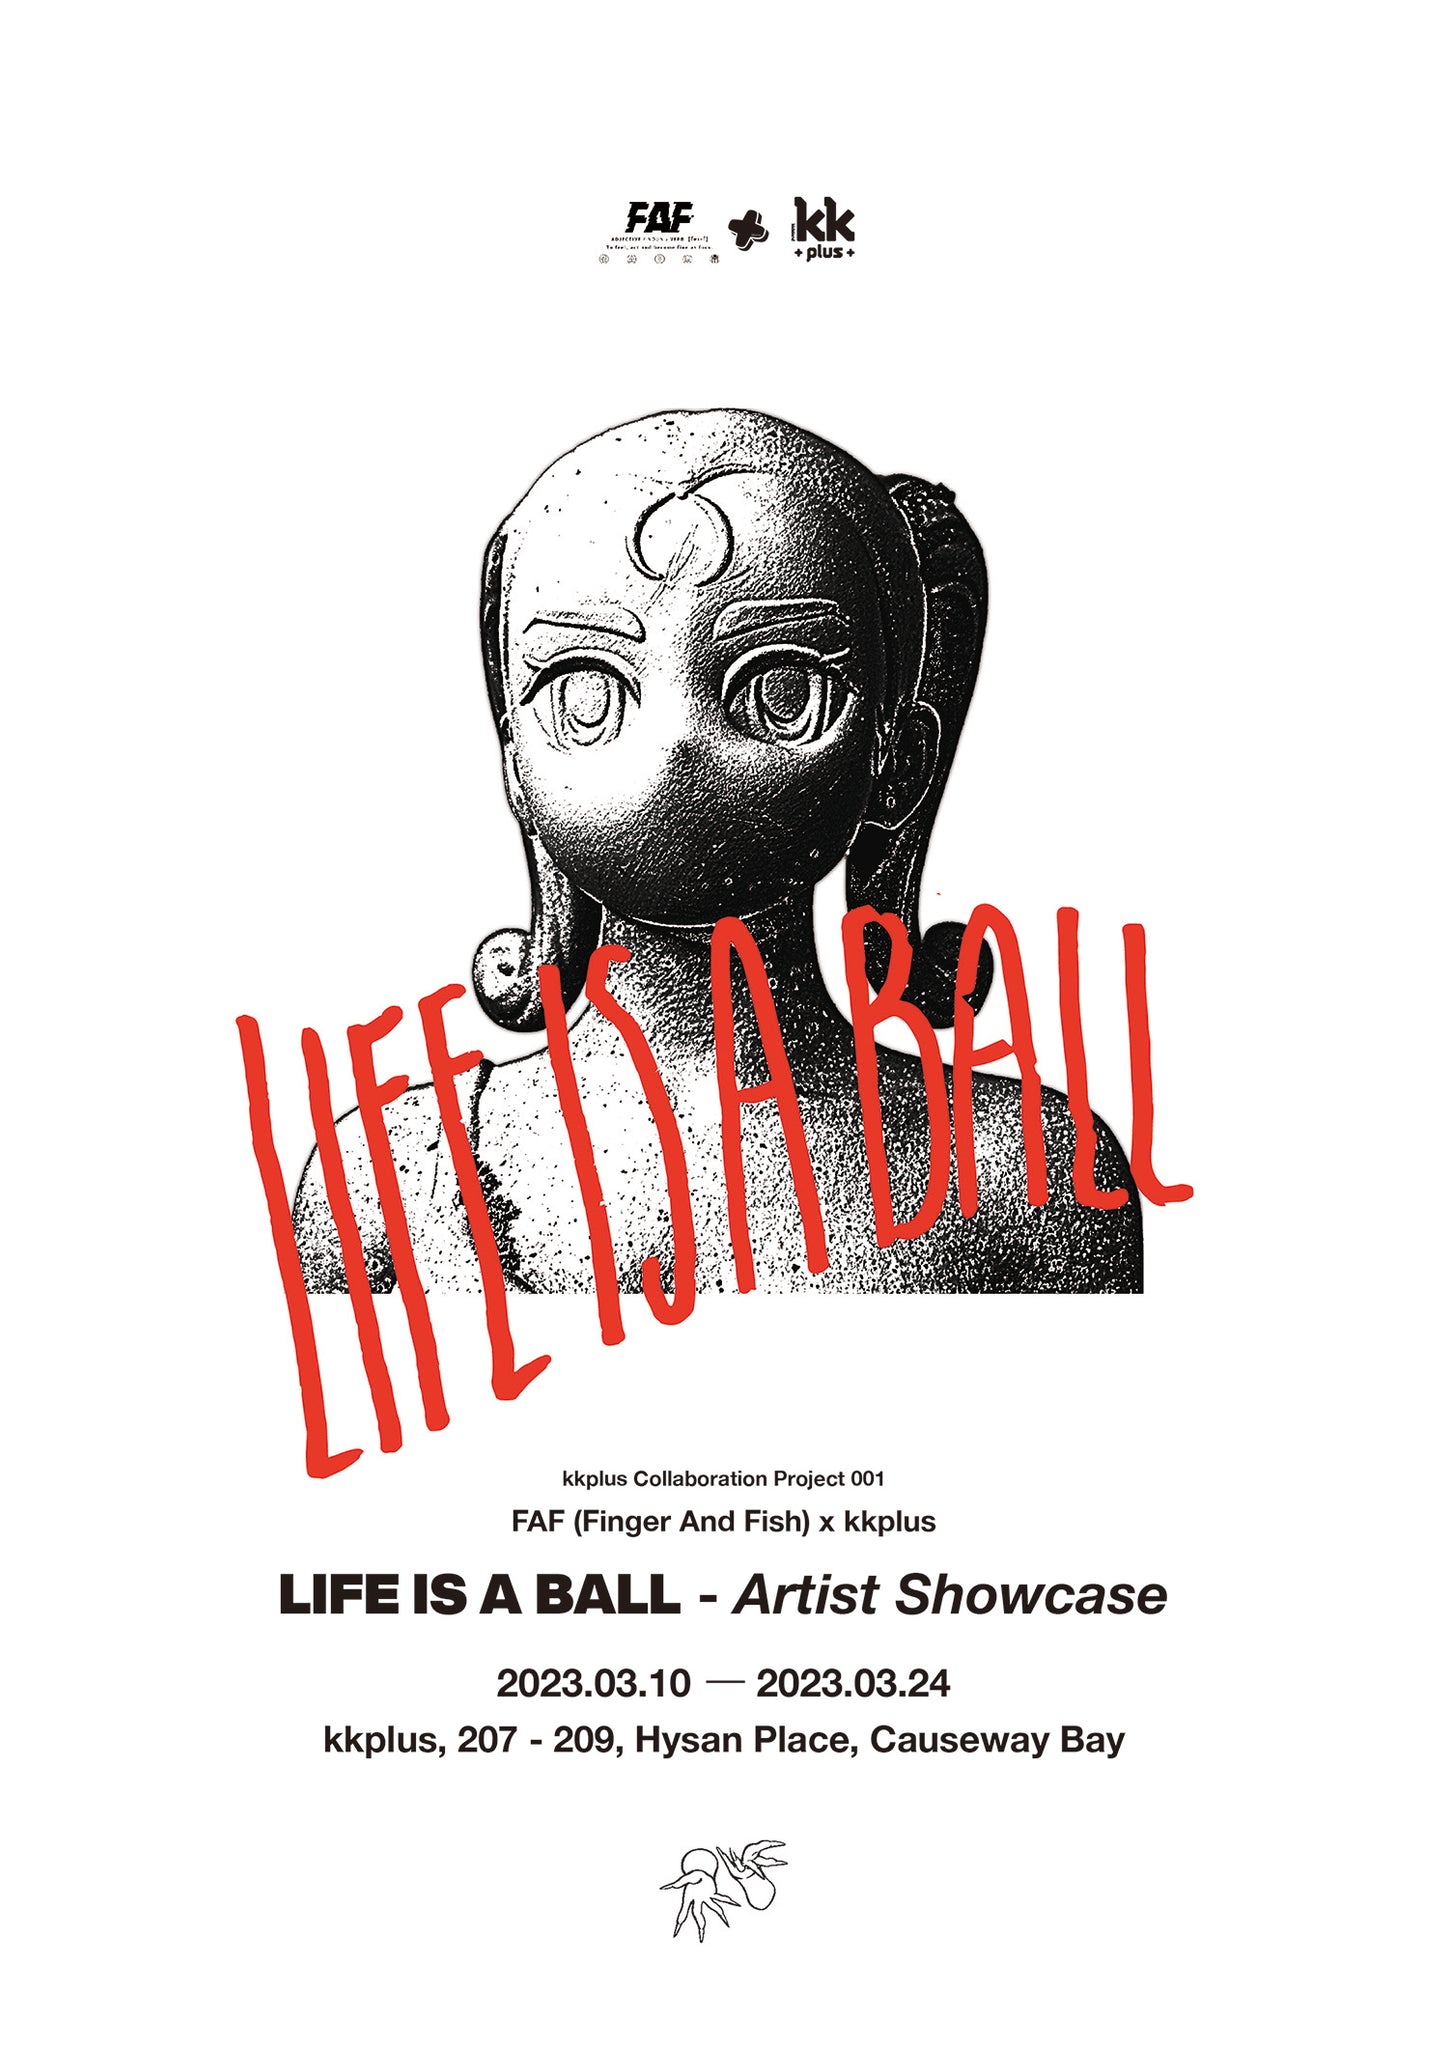 FAF Showcase "Life is a ball" at KKPLUS